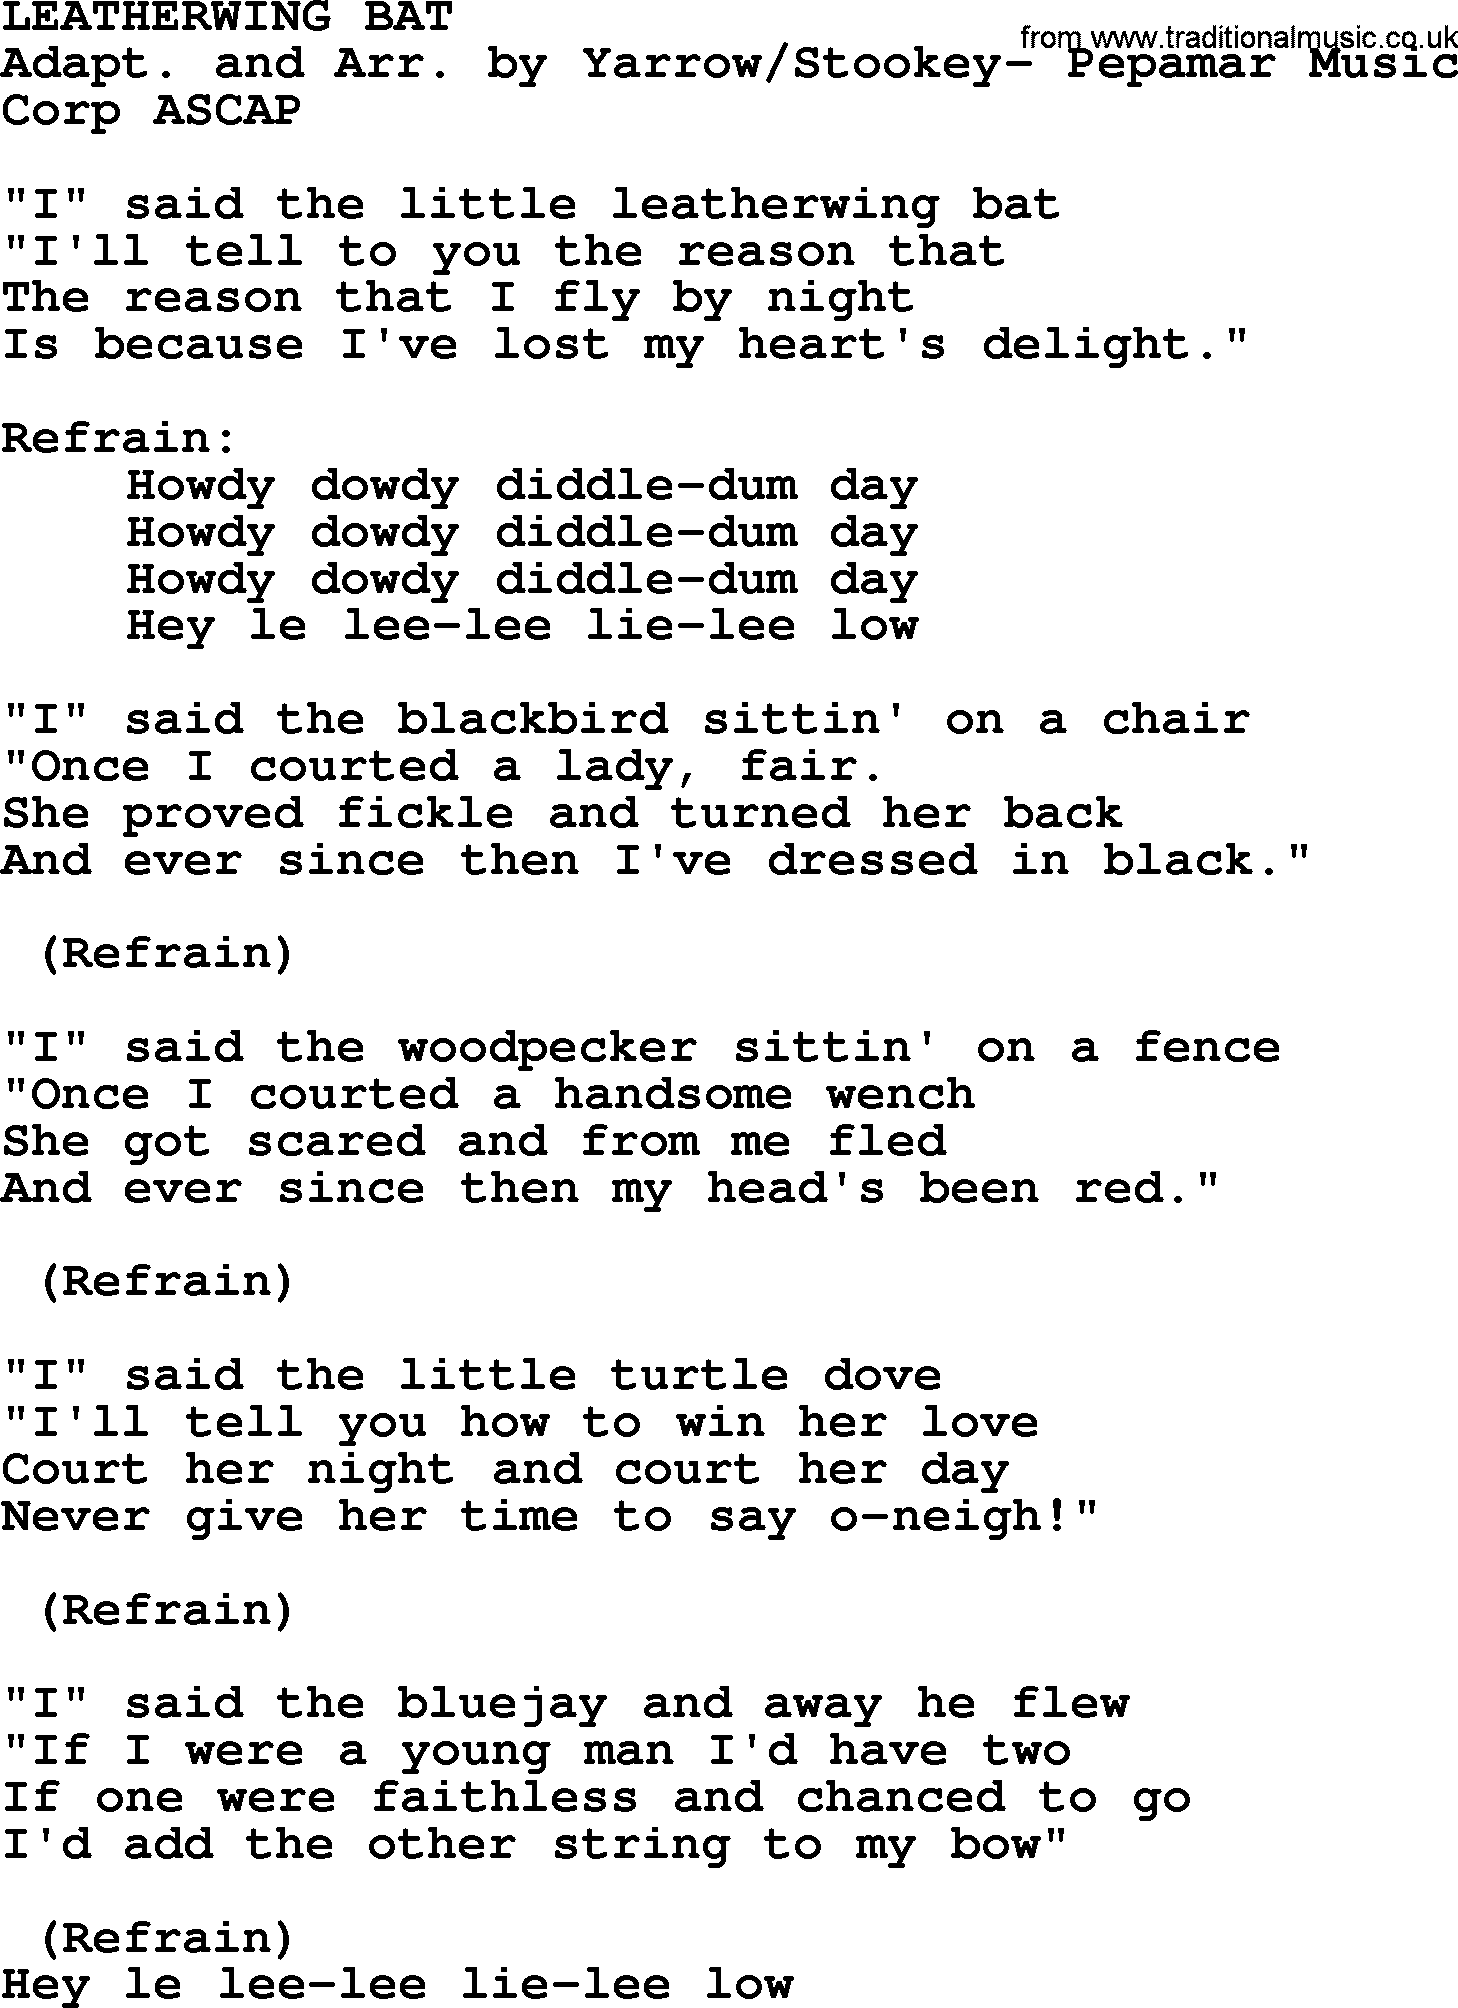 Peter, Paul and Mary song Leatherwing Bat lyrics